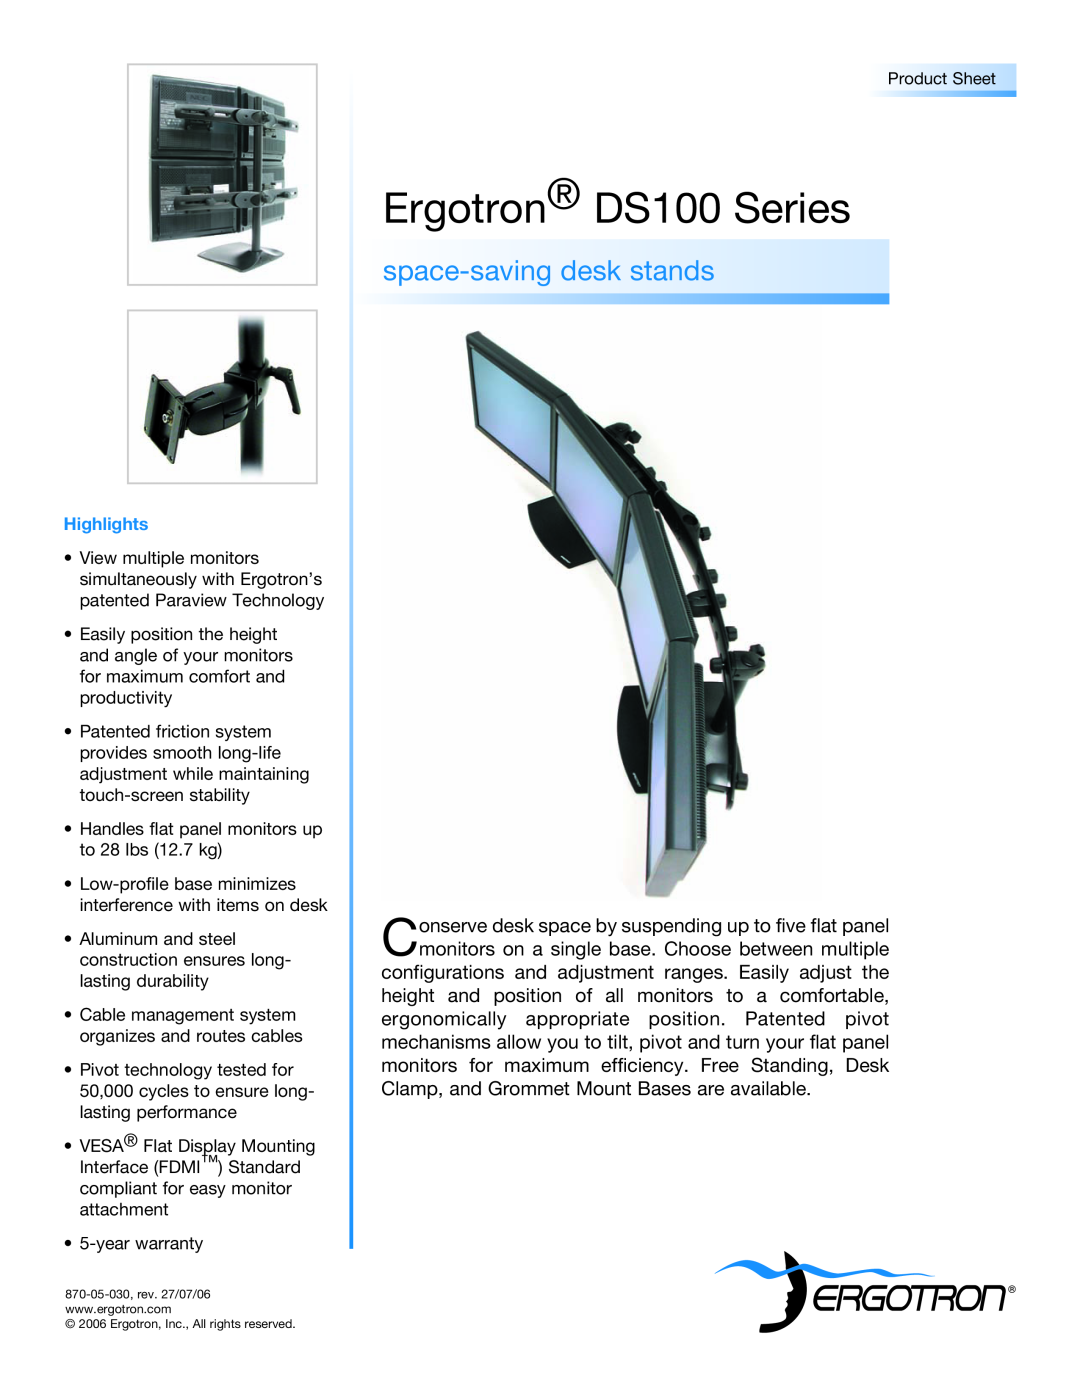 Ergotron DS100 Series warranty Ergotron DS100 Series, space-savingdesk stands 